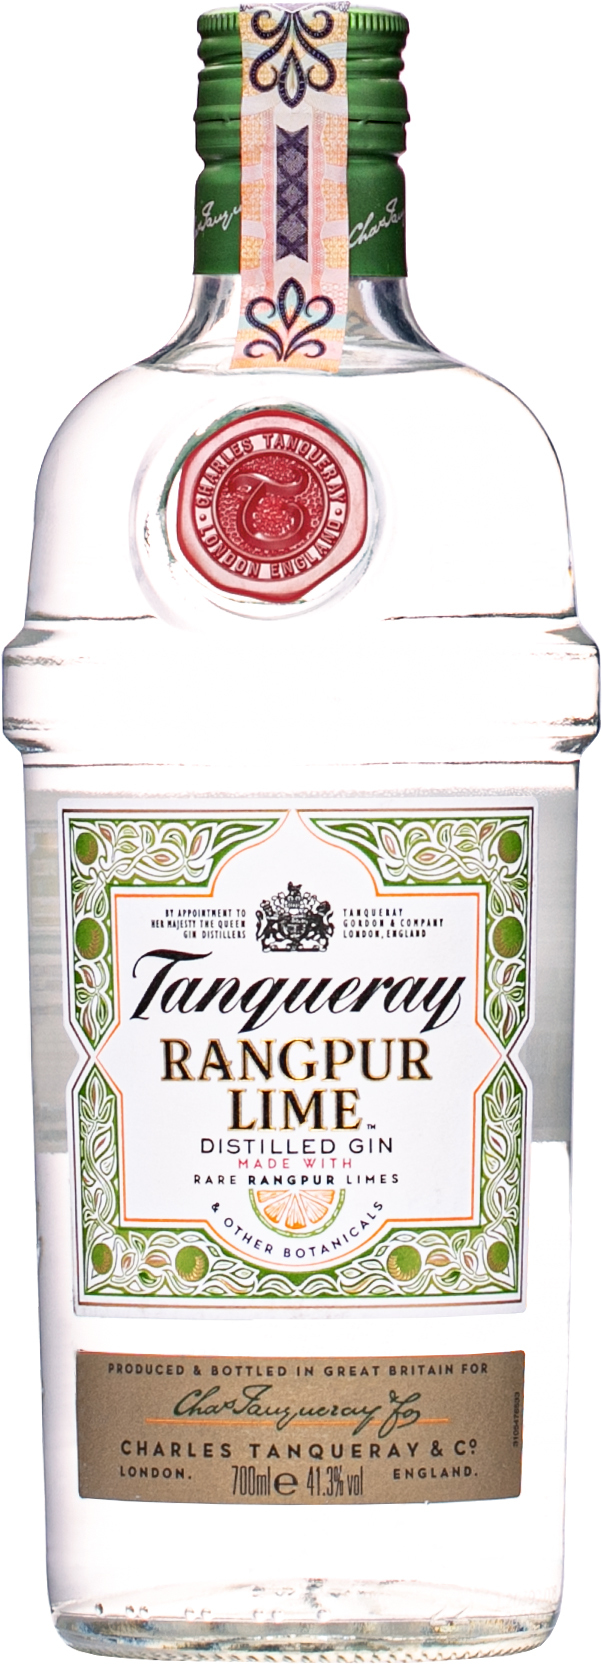 Tanqueray Rangpur Lime - Flavored Bondston Gin 